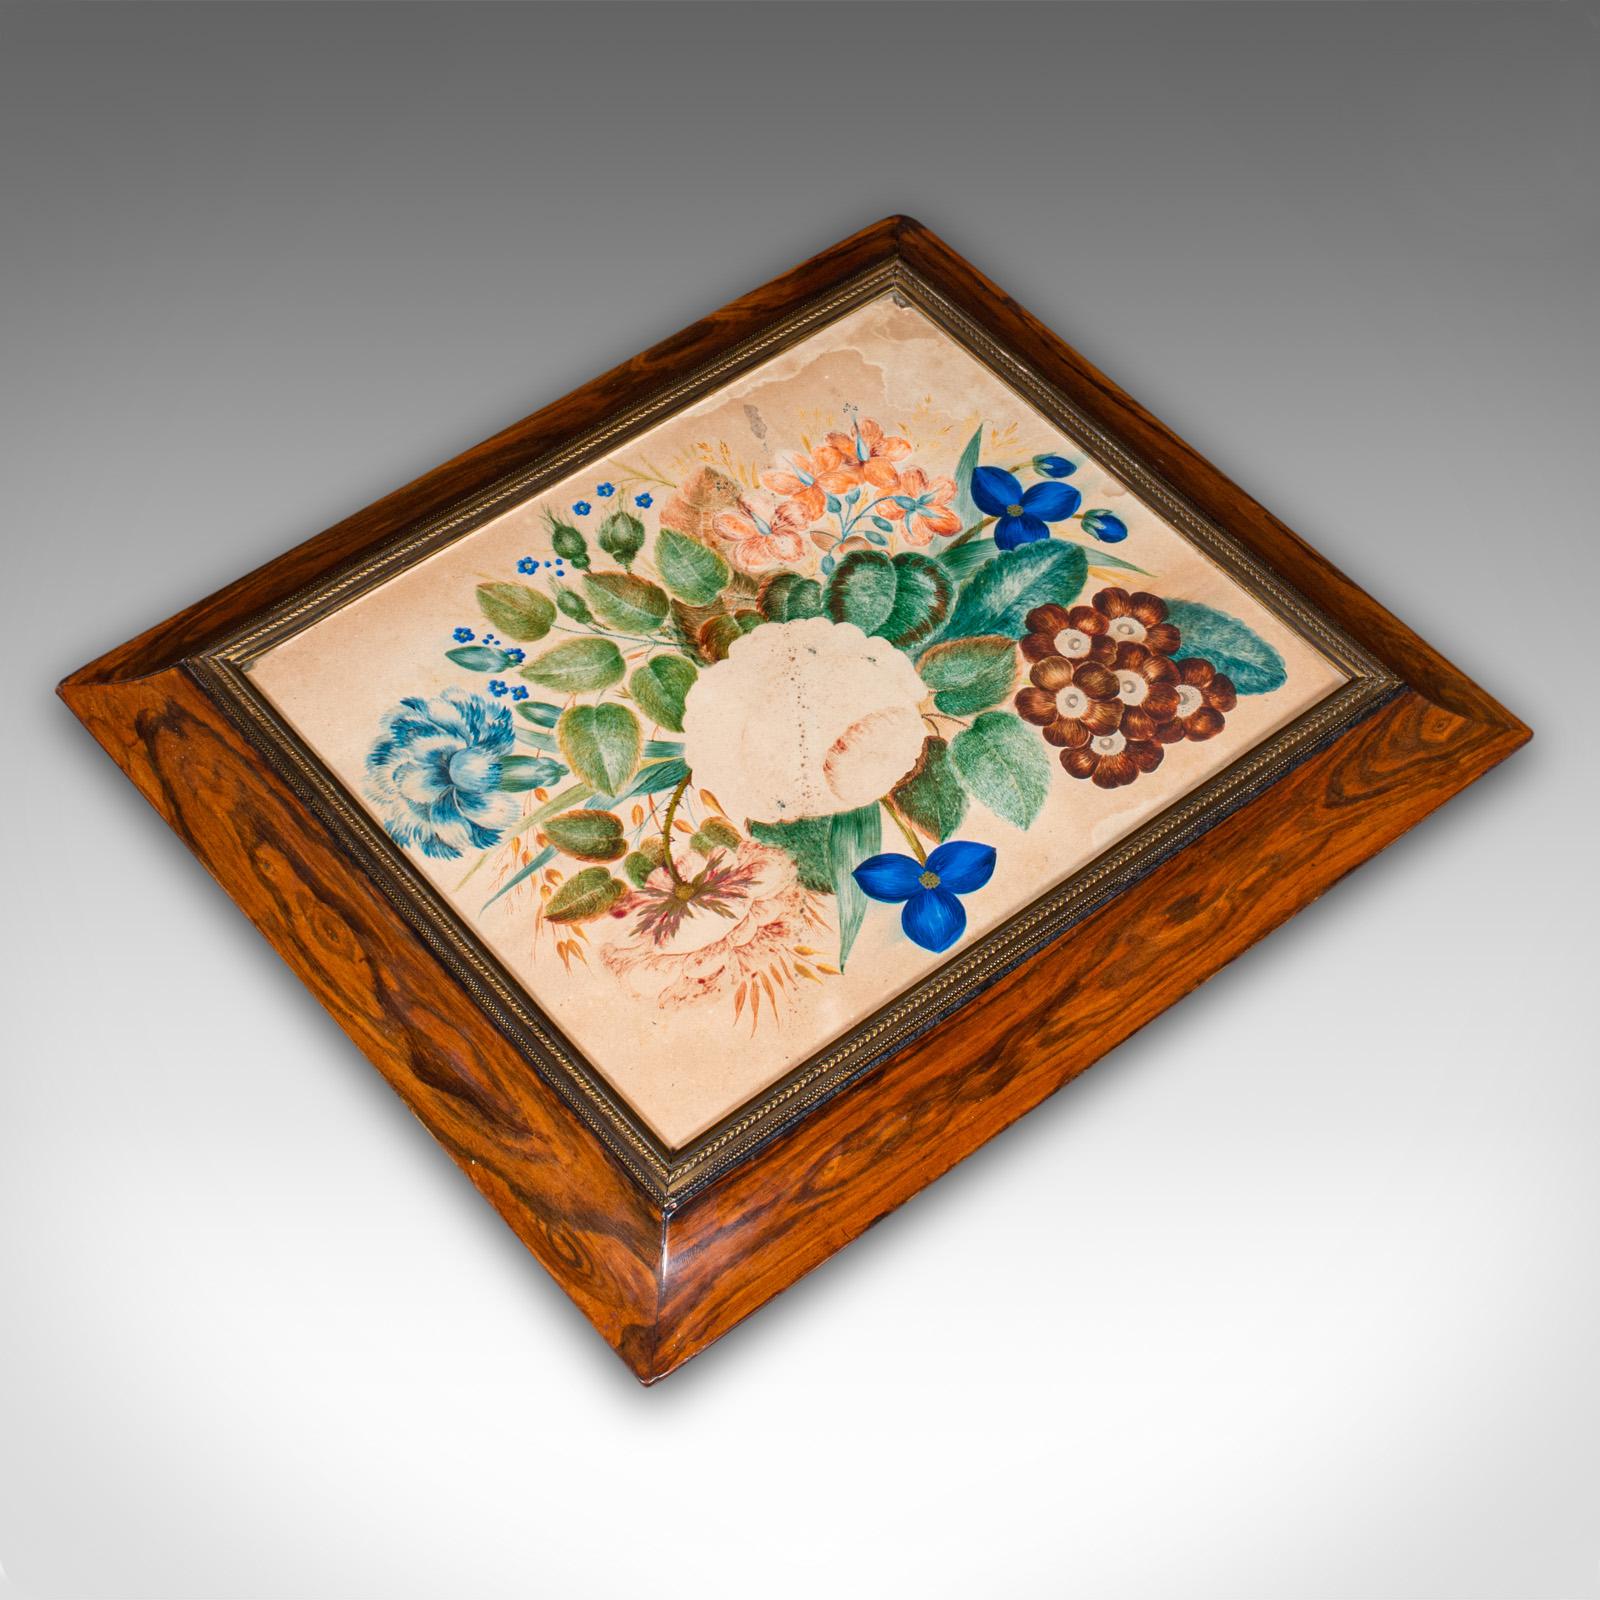 Antique Decorative Finery Box, English, Jewellery, Keepsake, Regency, Circa 1830 For Sale 1